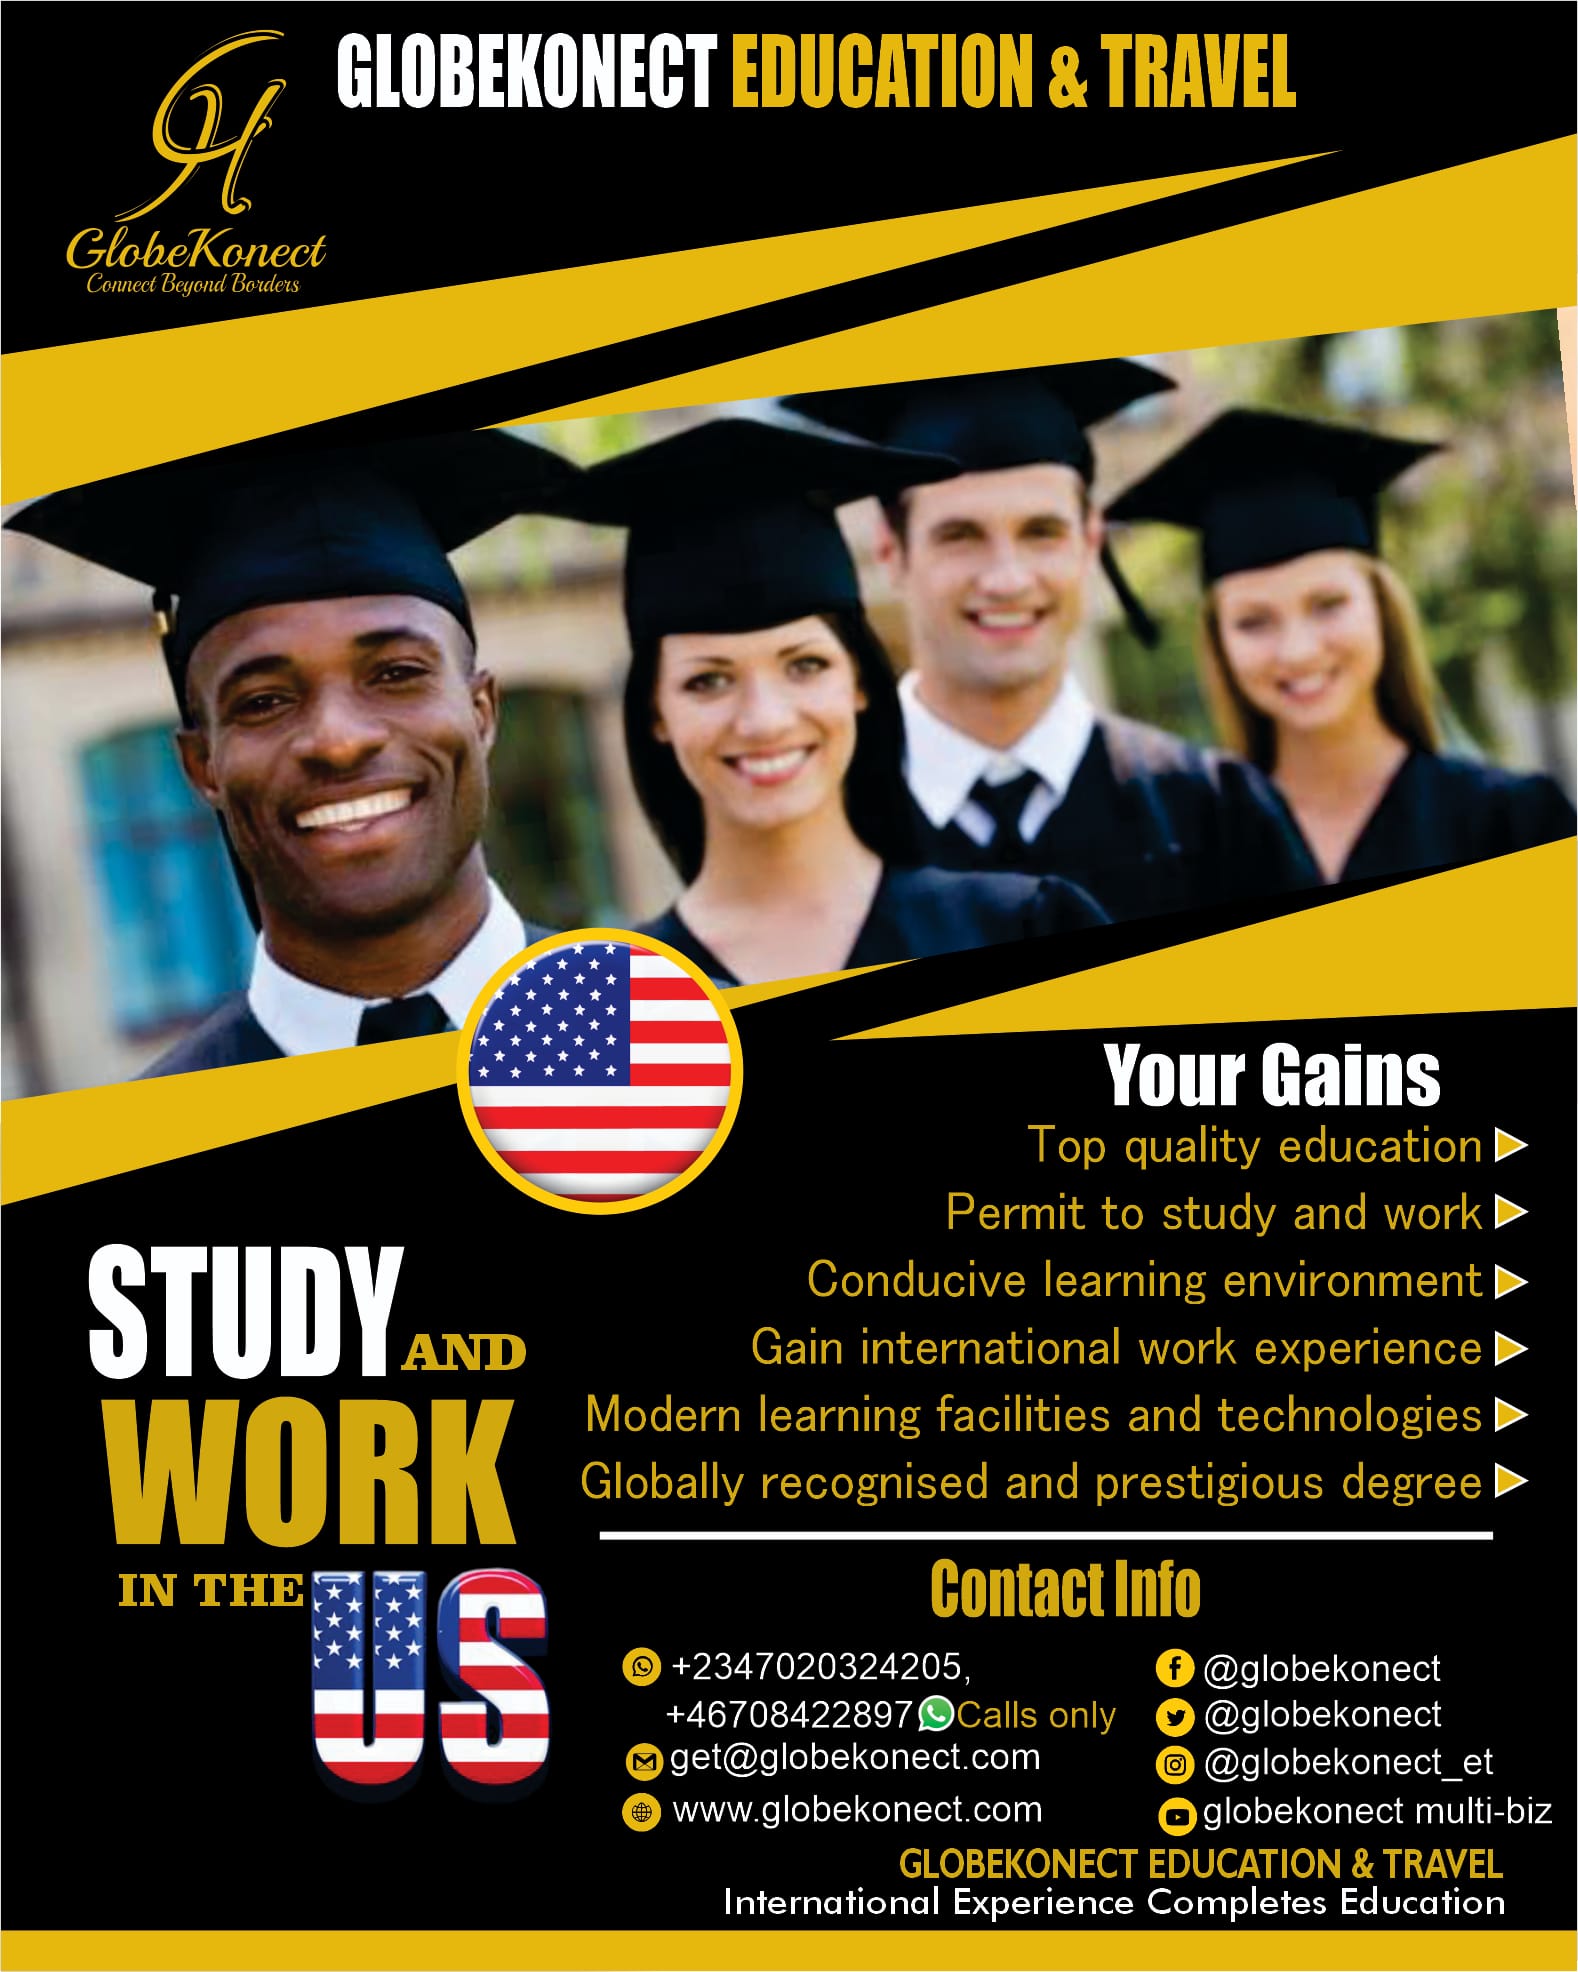 Study & Work in the U.S.